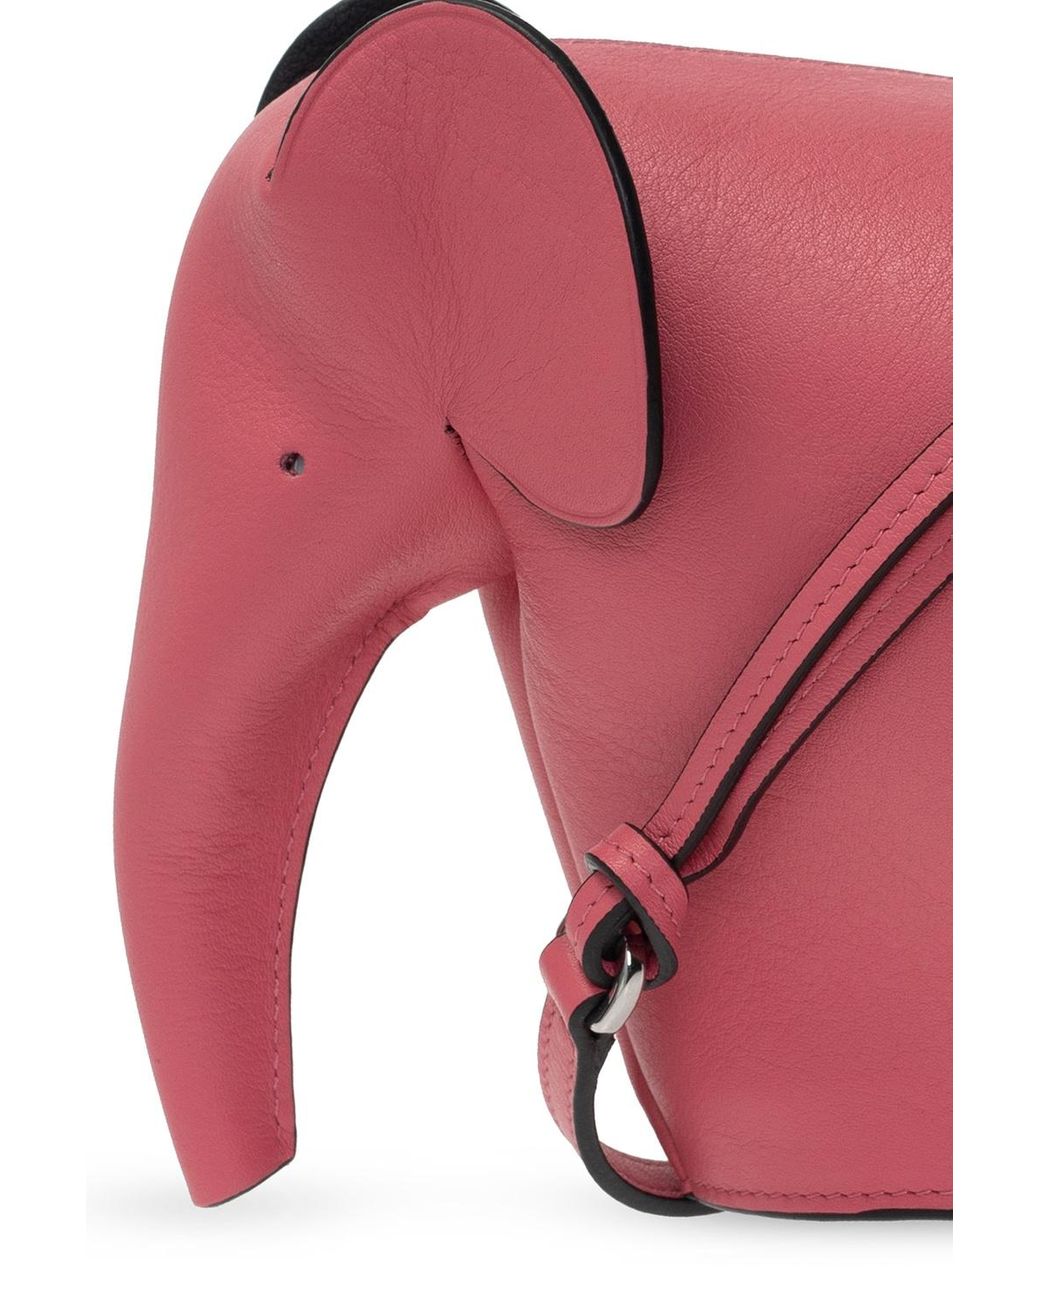 Loewe Leather 'elefante' Shoulder Bag in Pink - Lyst